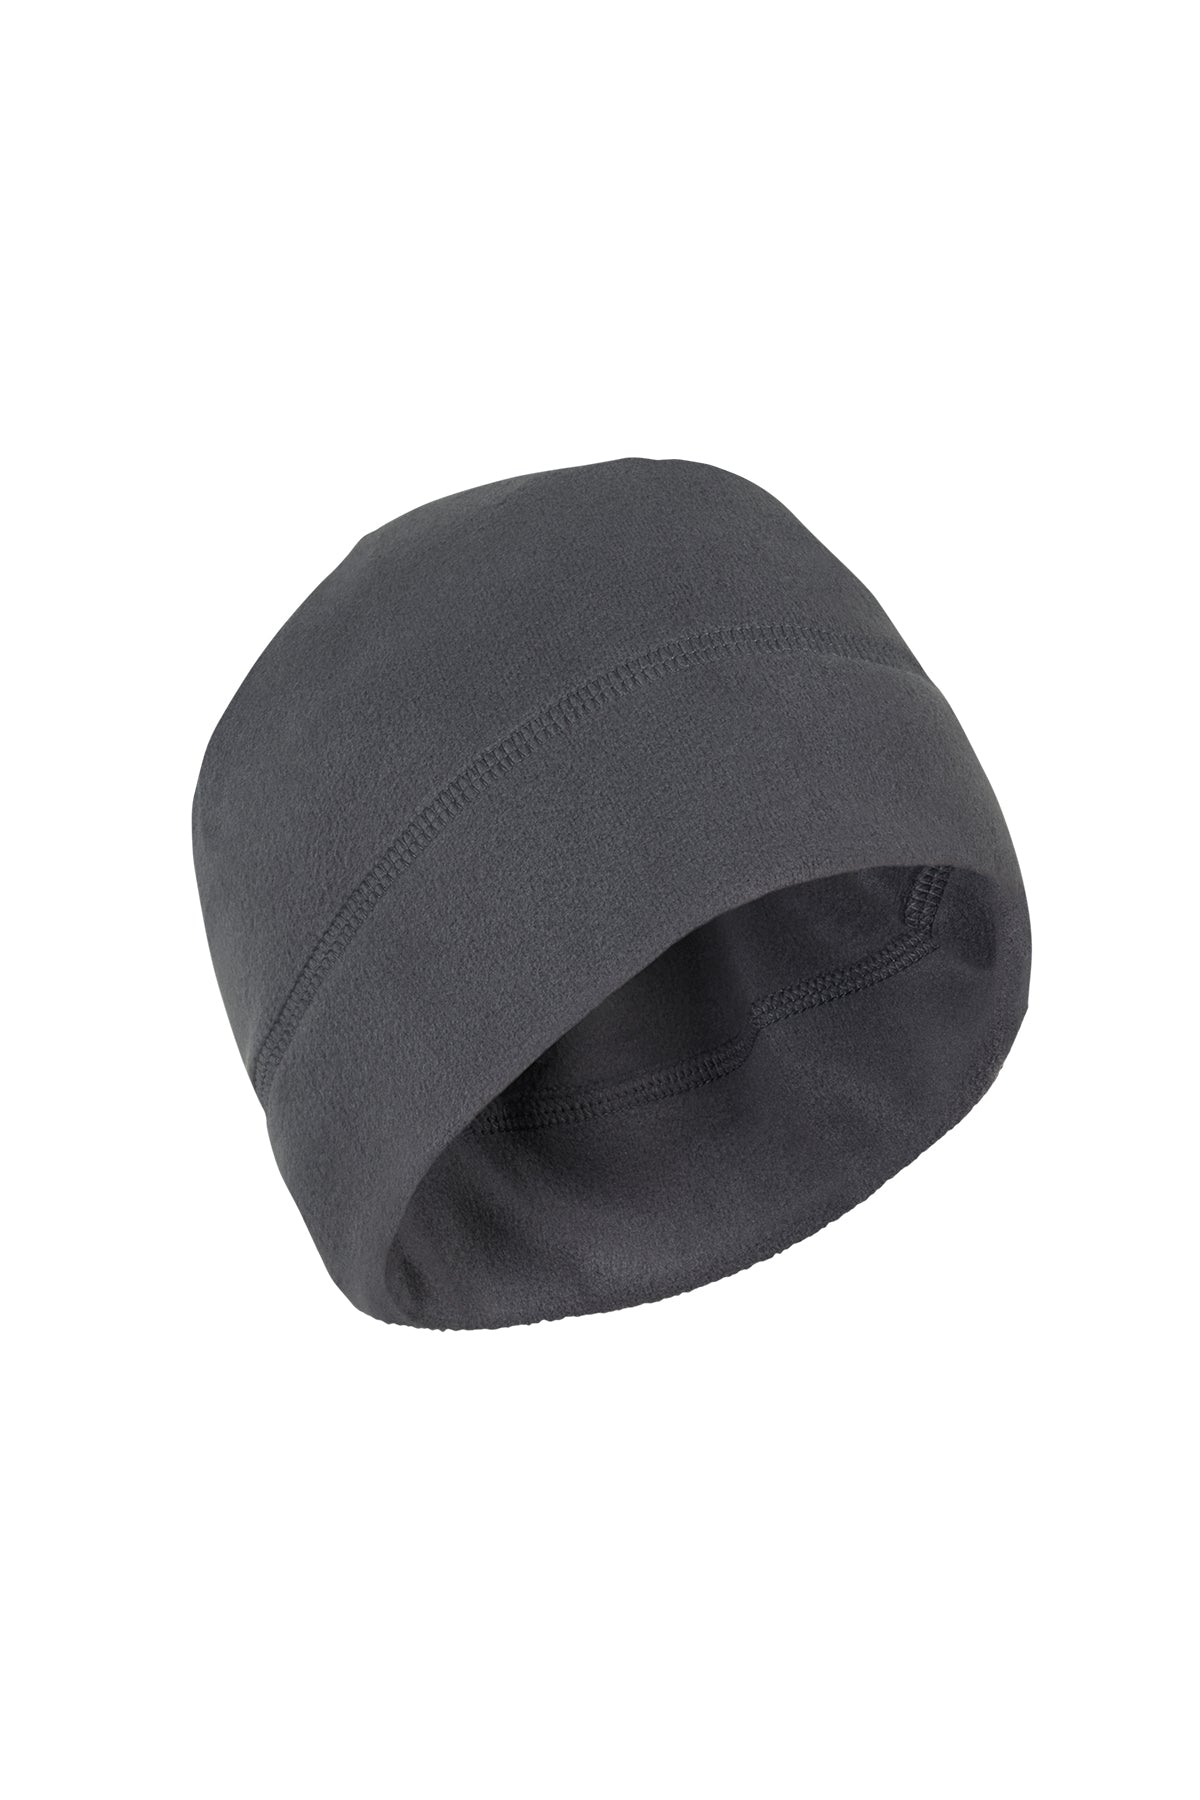 Wholesale Thermal Unisex Hats for Men & Women Army Grade Fleece Thermal Hats - Grey